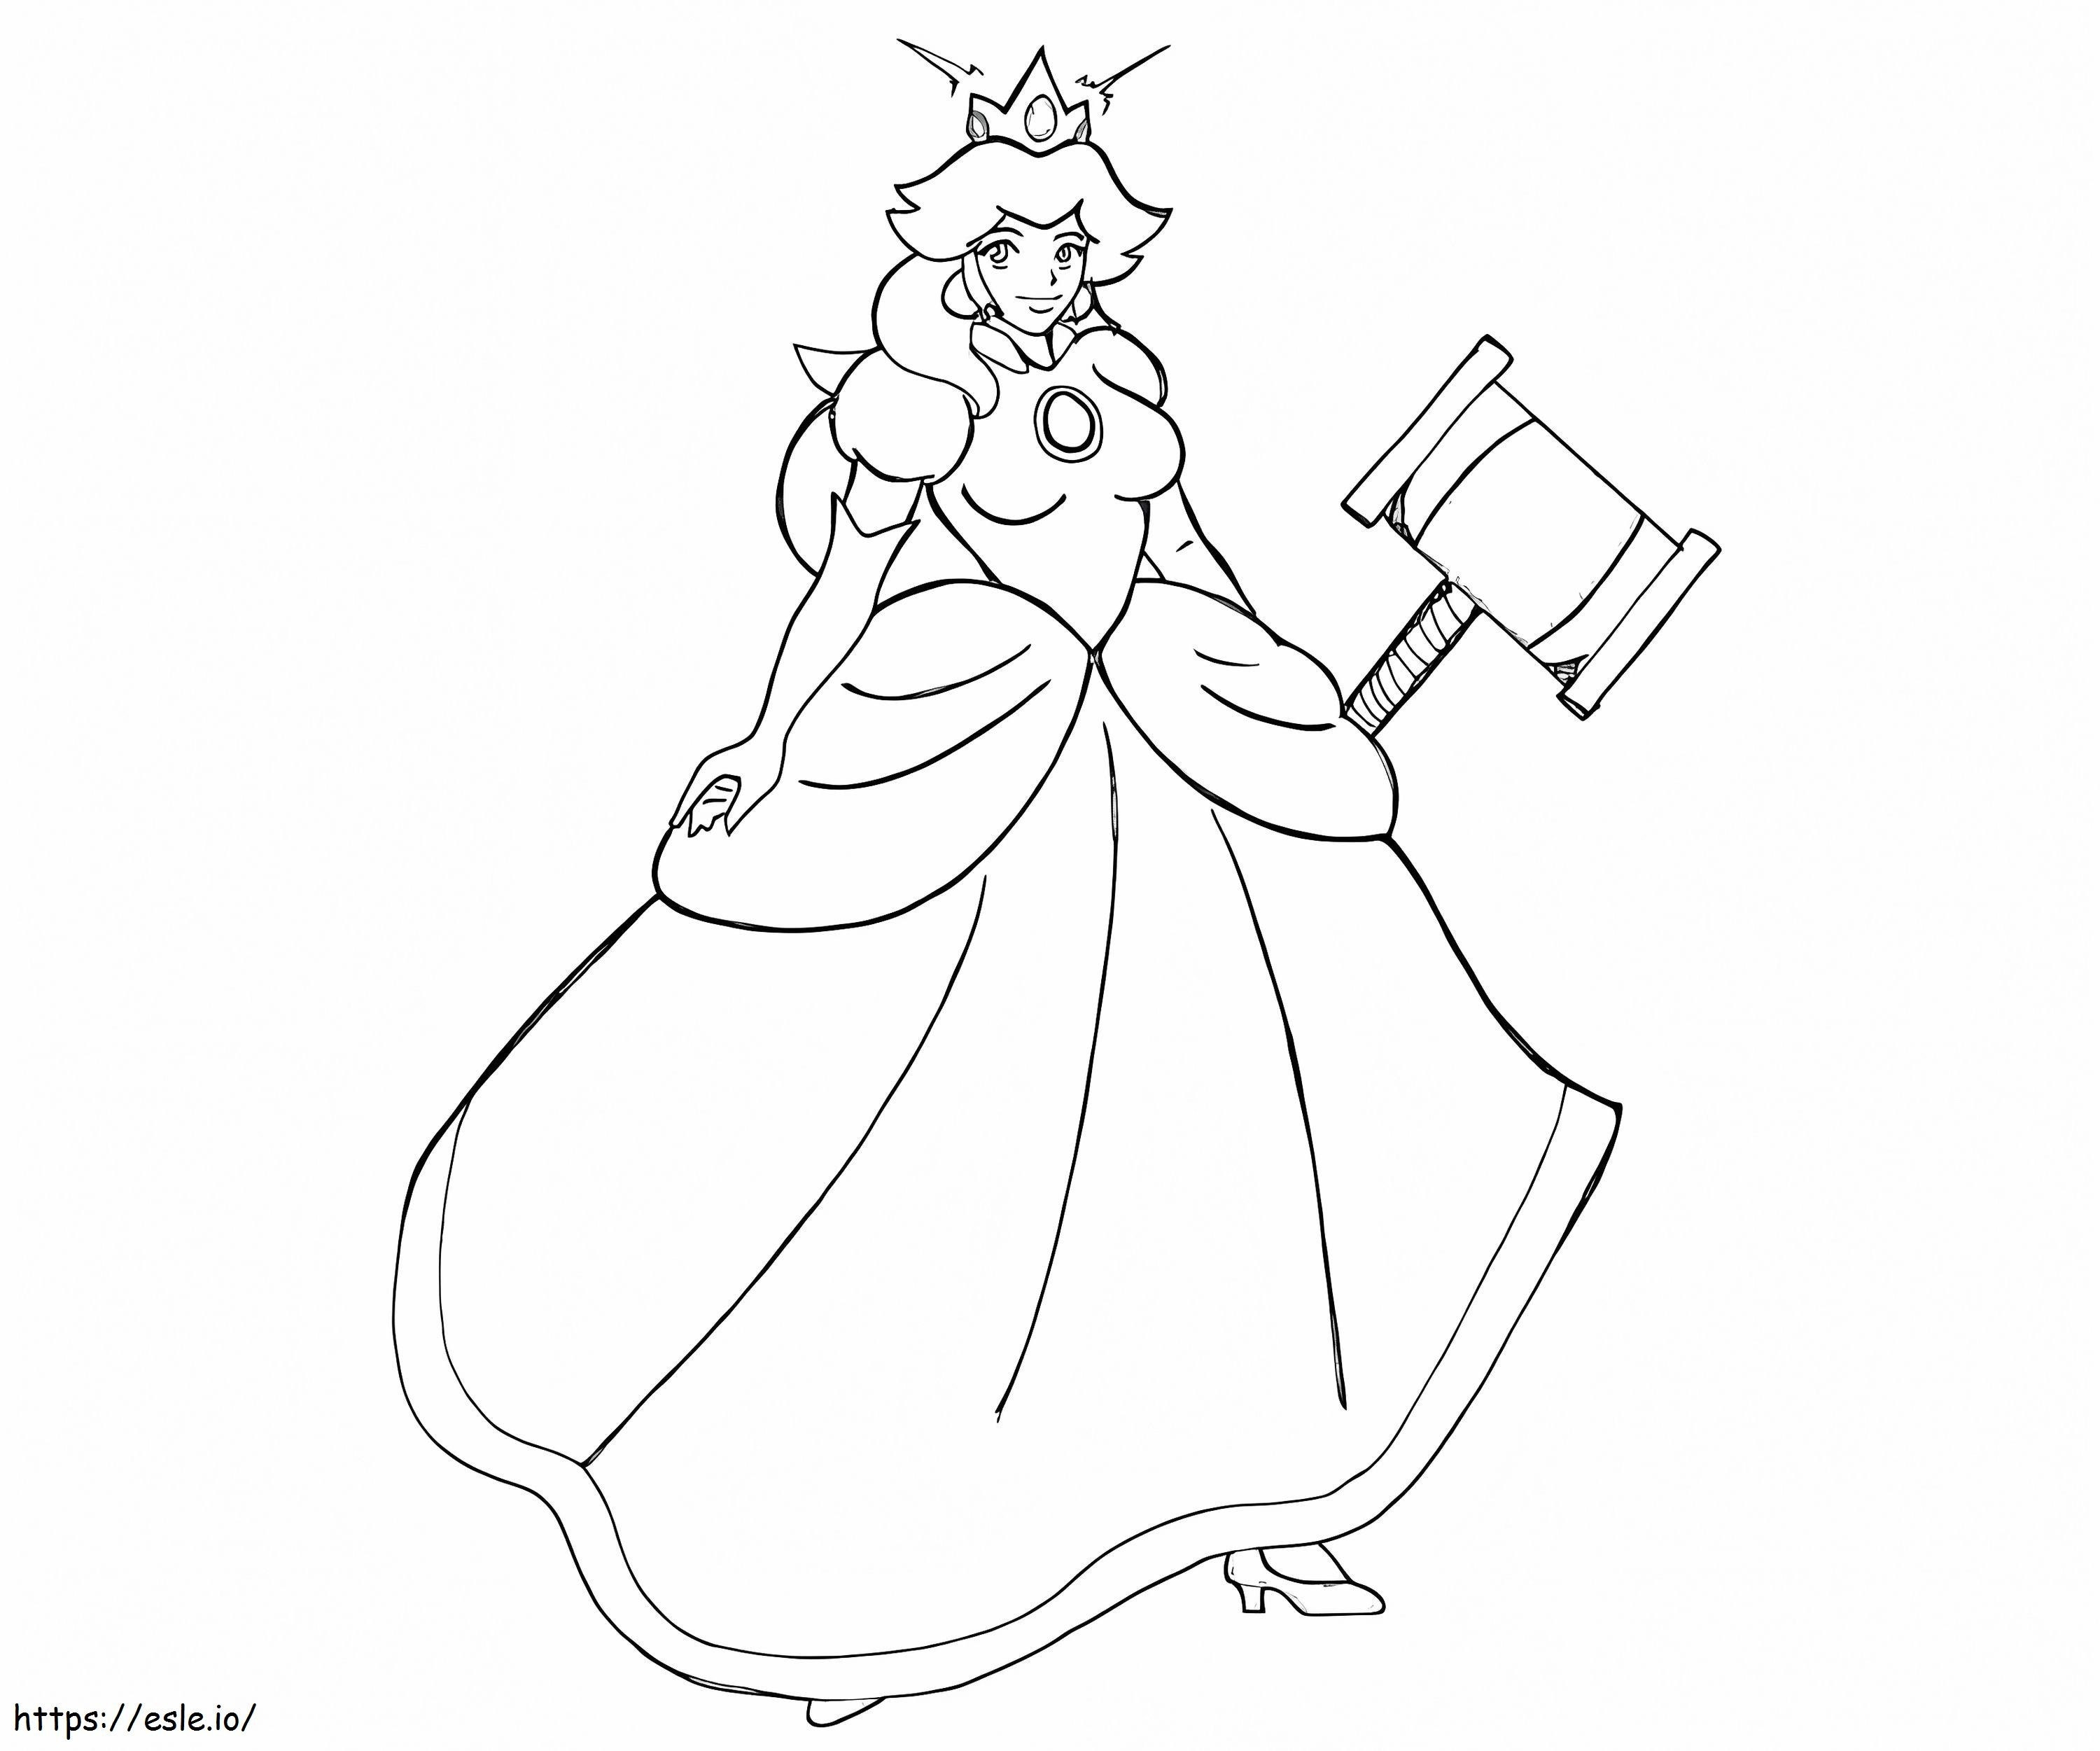 Coloriage Princesse Peach souriante tenant un marteau à imprimer dessin